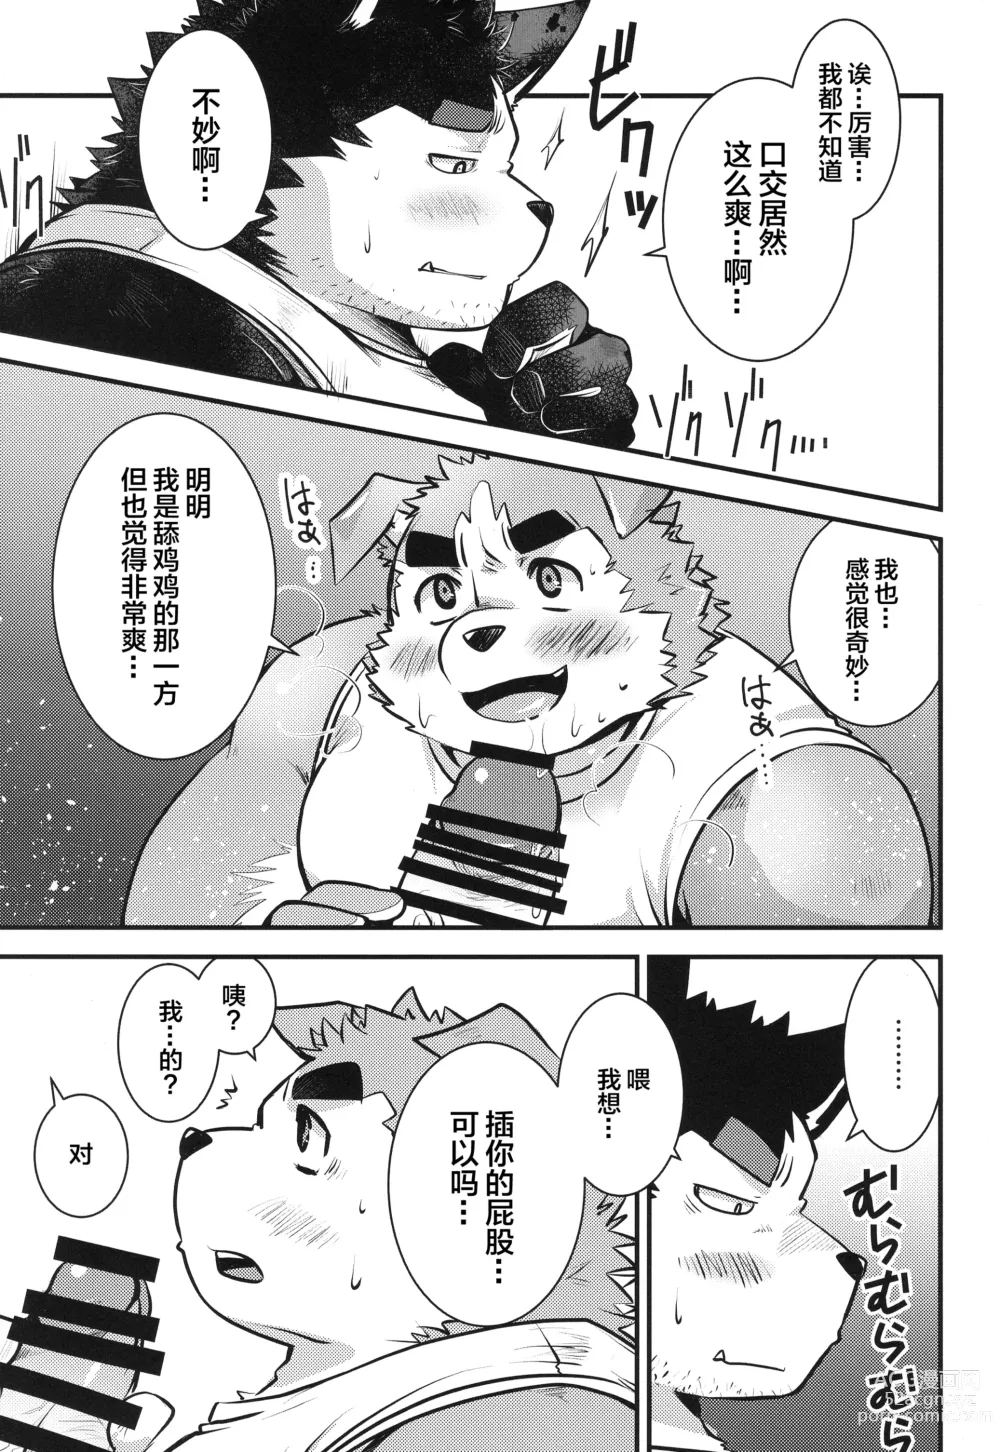 Page 5 of doujinshi Eccentric Shintai Kensa